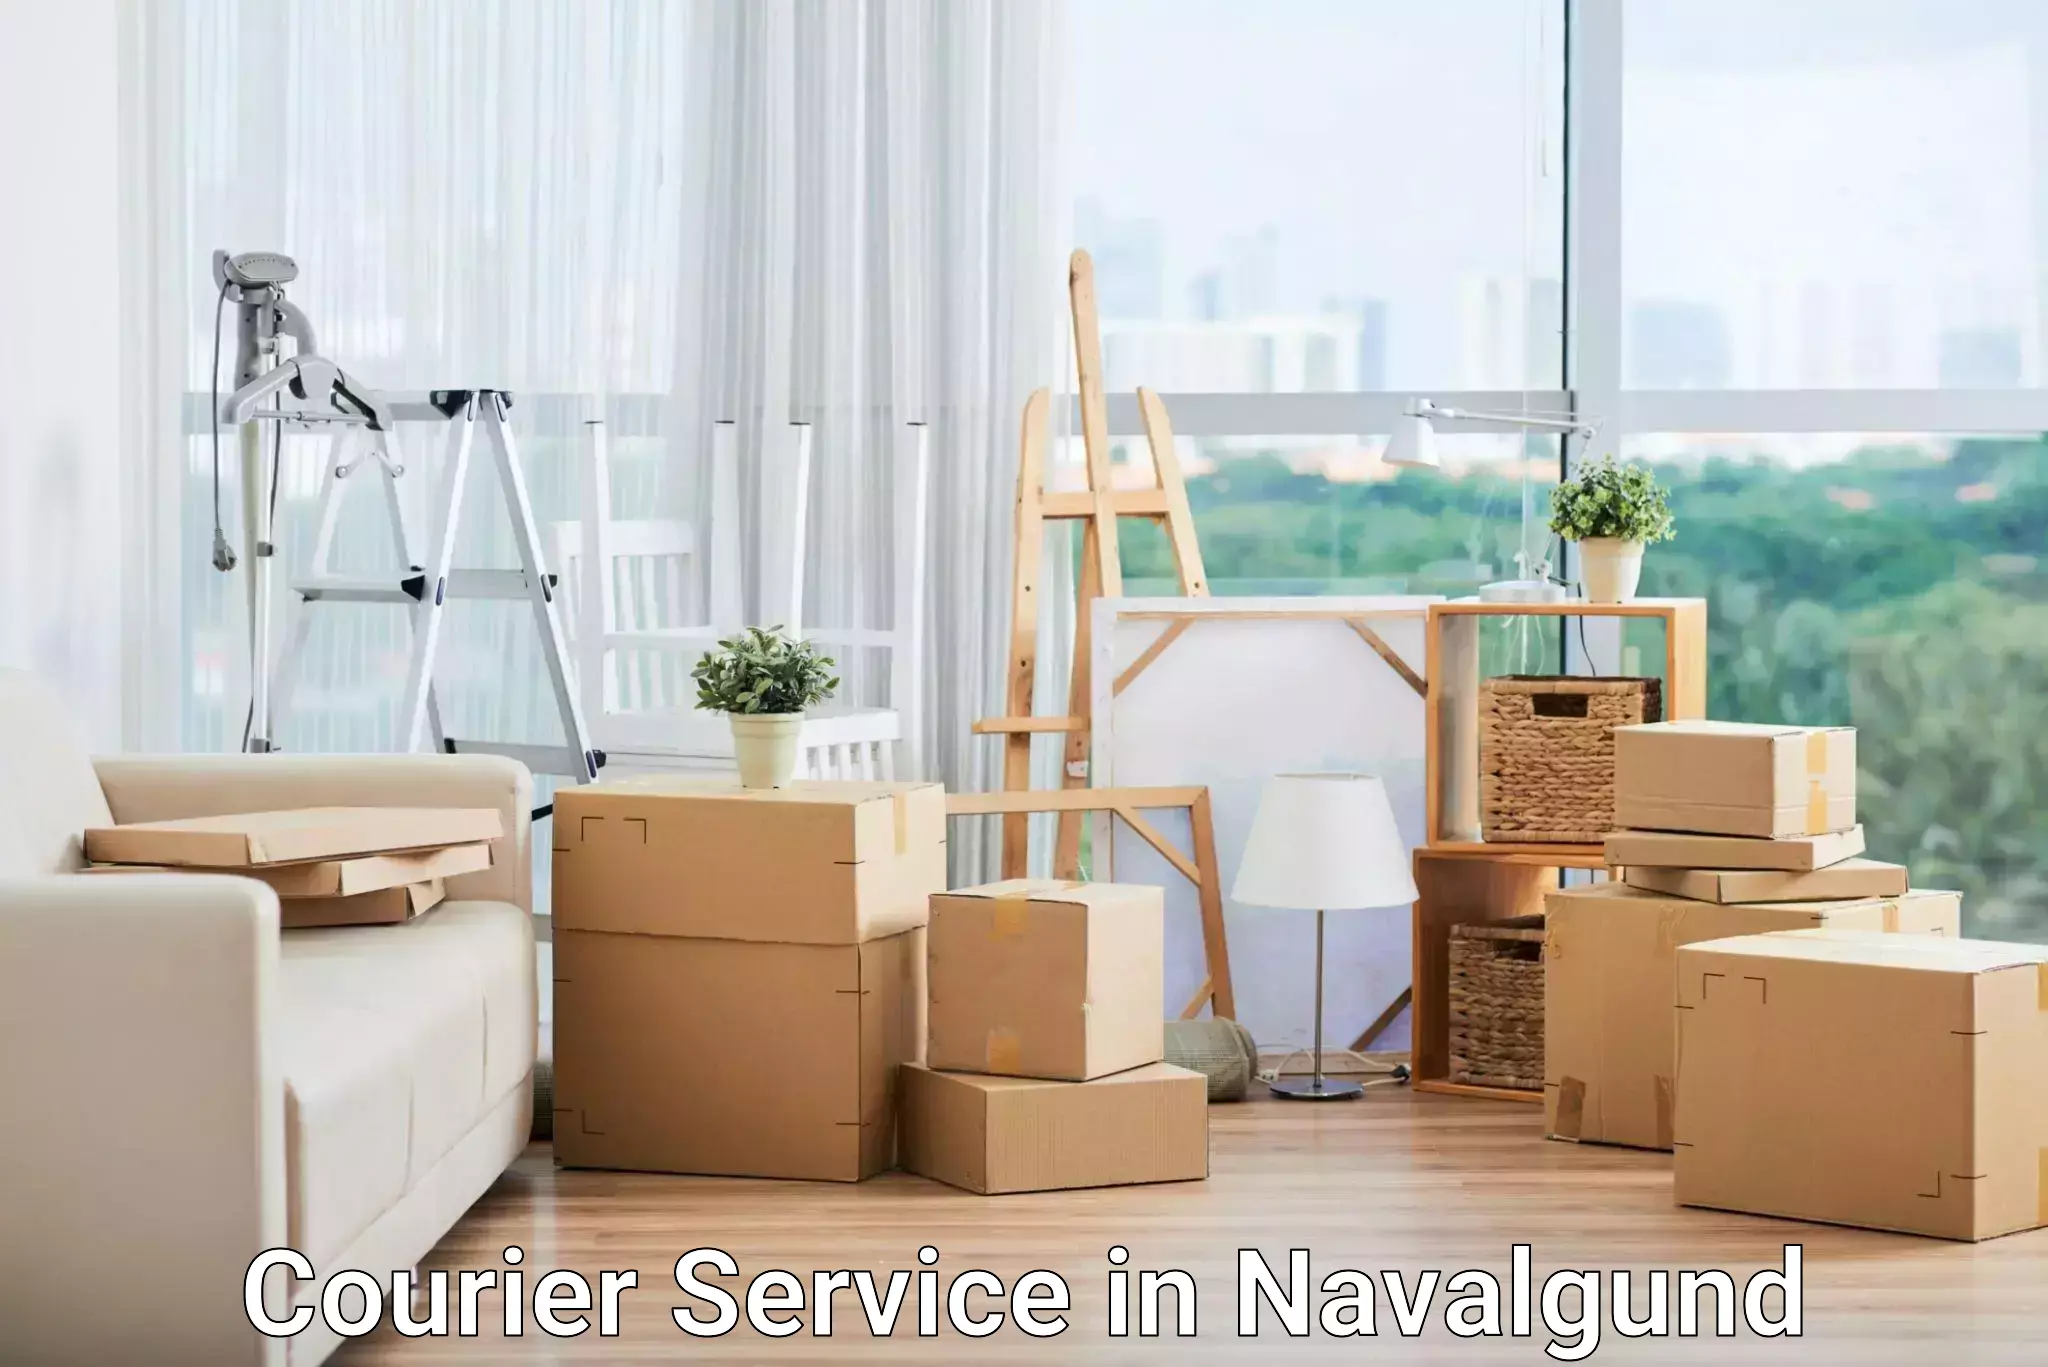 Customer-centric shipping in Navalgund